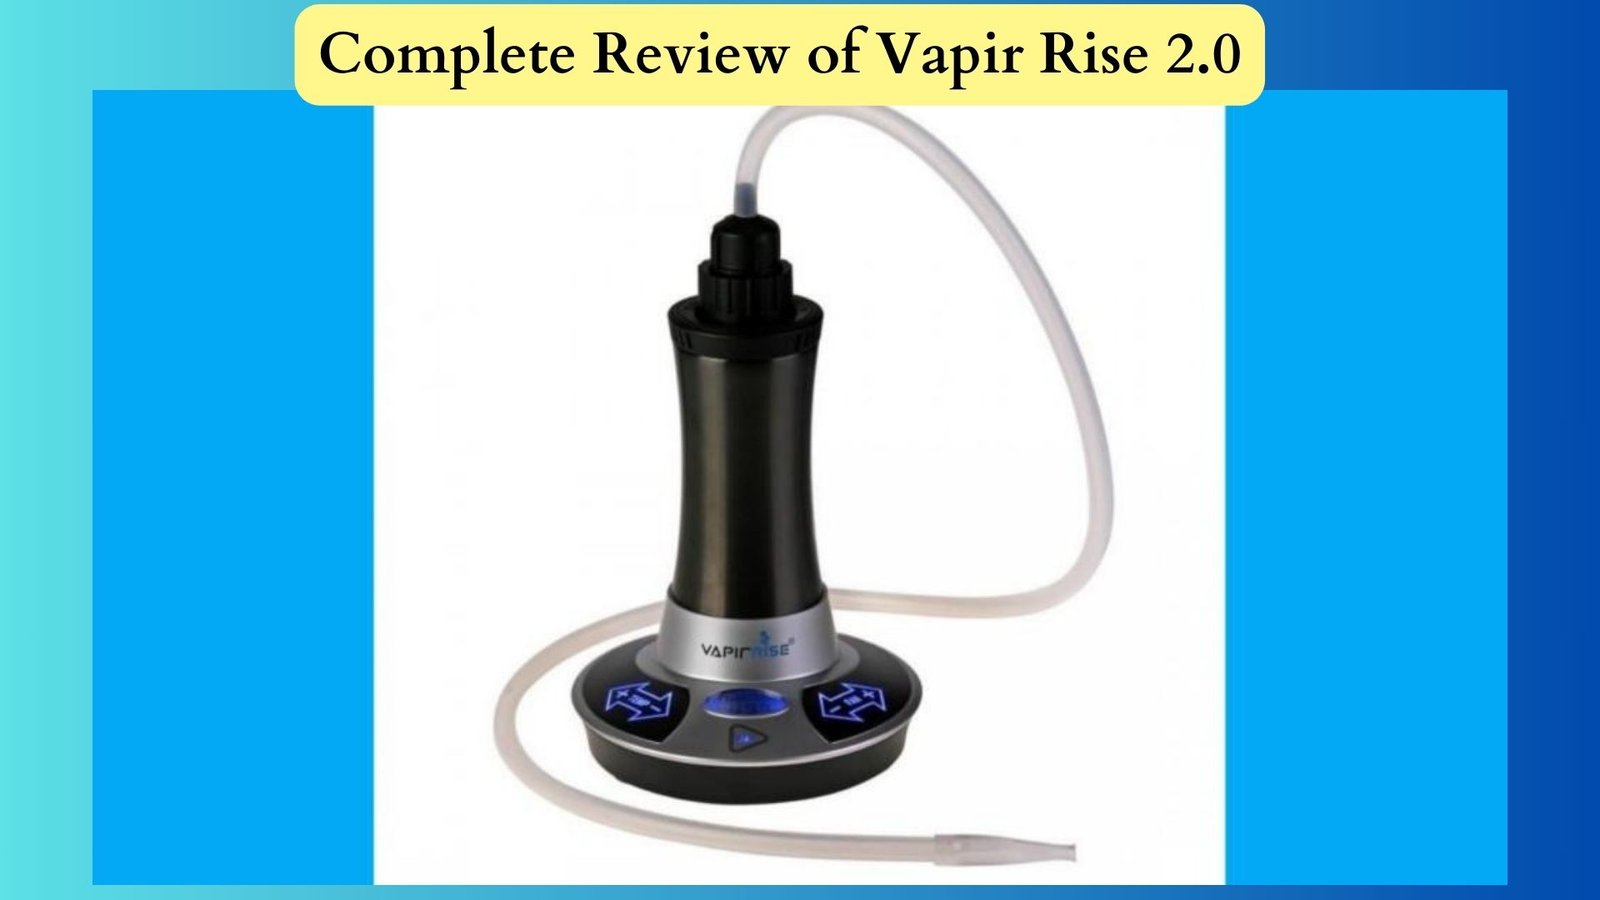 Vapir Rise 2.0 Complete Review: Features, Compatibility & Pros & Cons